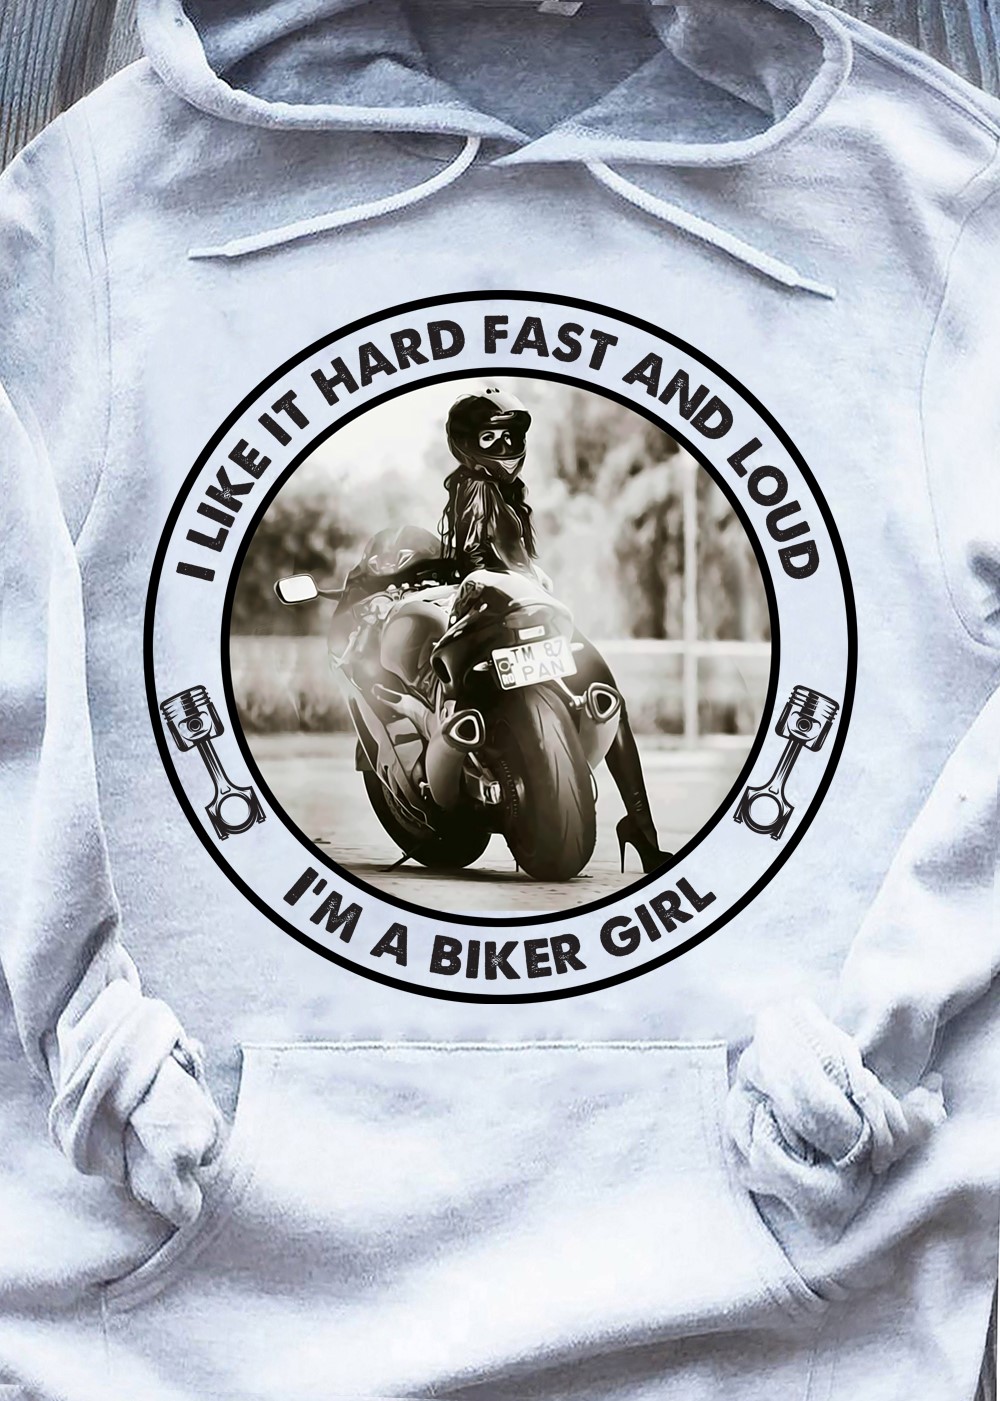 I like it hard fast and loud I'm a biker girl